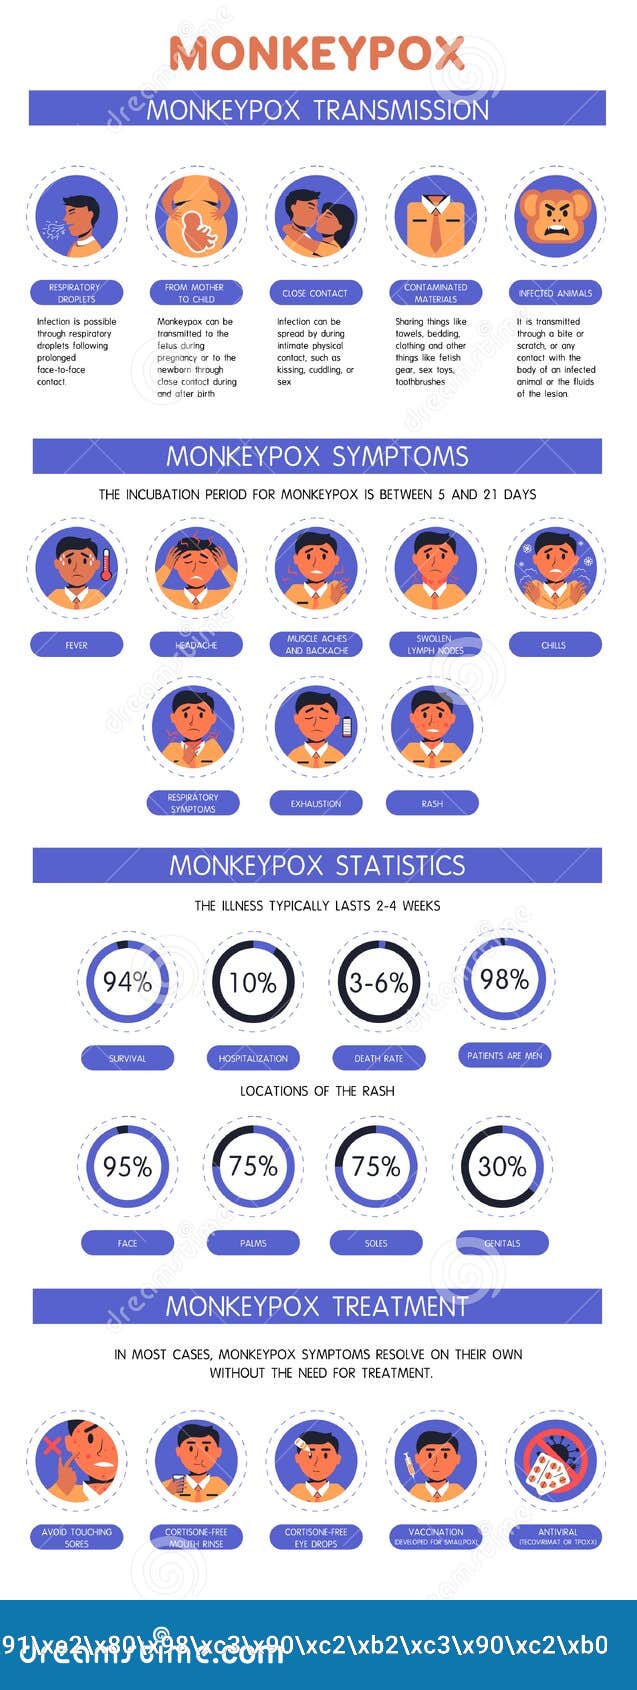 monkeypox virus outbreak banner of infographic, transmission, disease statistics, infection symptoms, treatment options. world